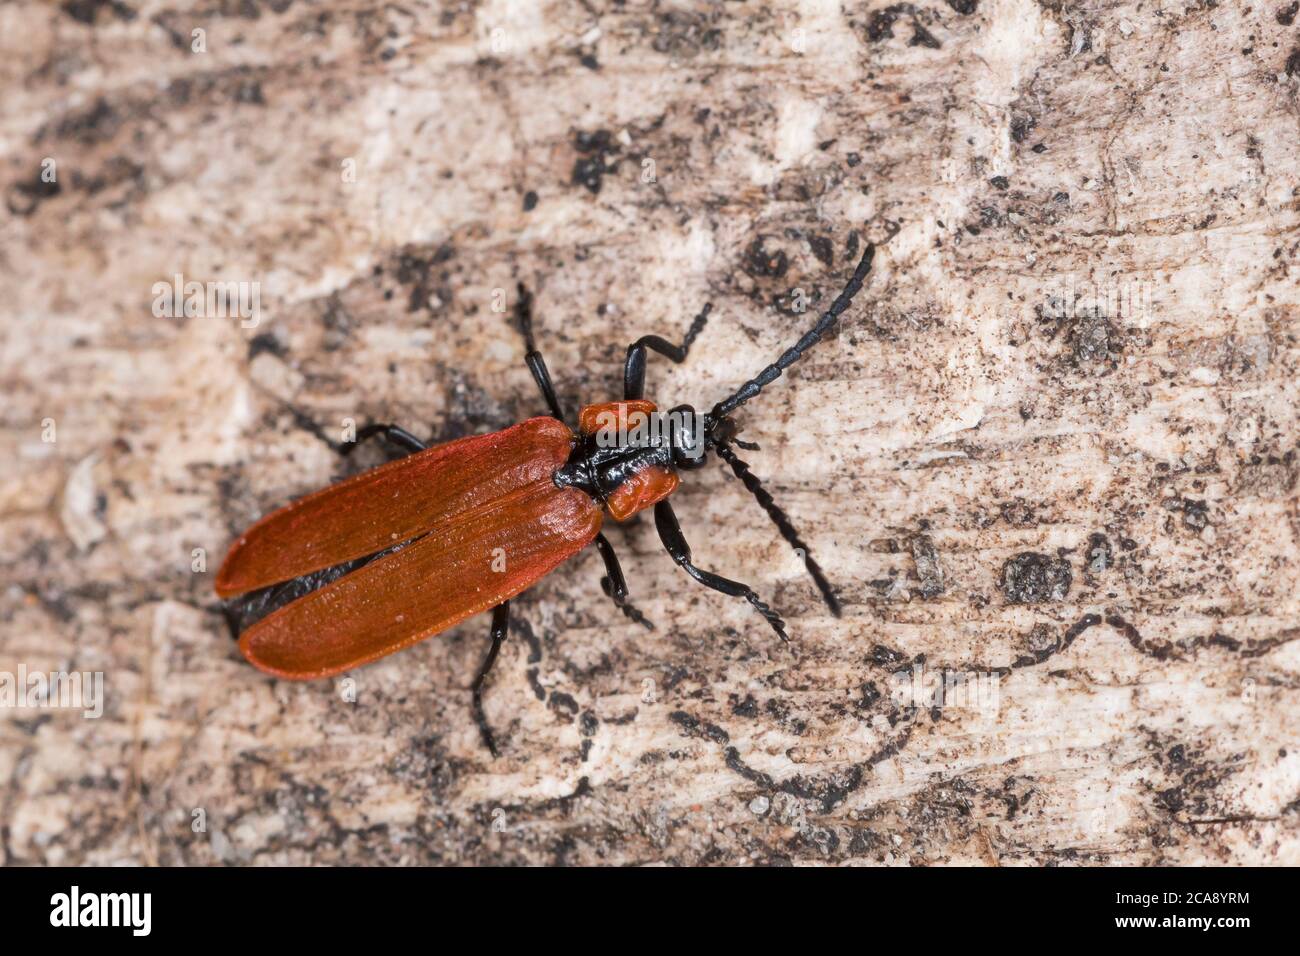 Rüssel-Rotdeckenkäfer, Rotdeckenkäfer, Rotdecken-Käfer, Lygistopterus sanguineus, Net-winged beetle, la lycie sanguine, Lycidae Stock Photo